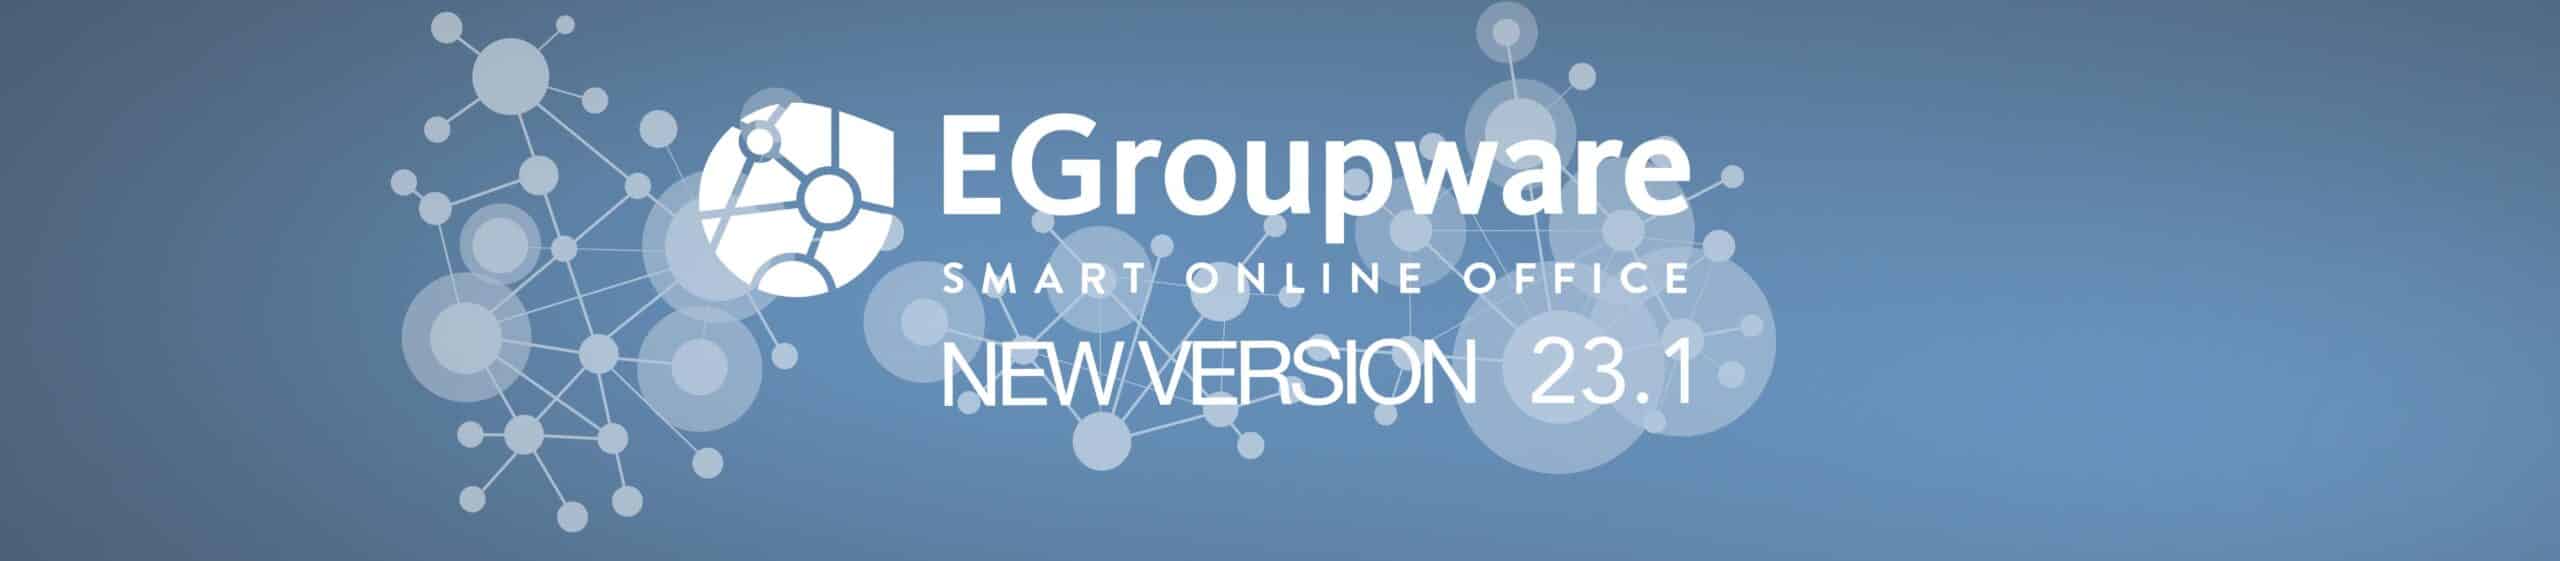 New EGroupware Version 23.1